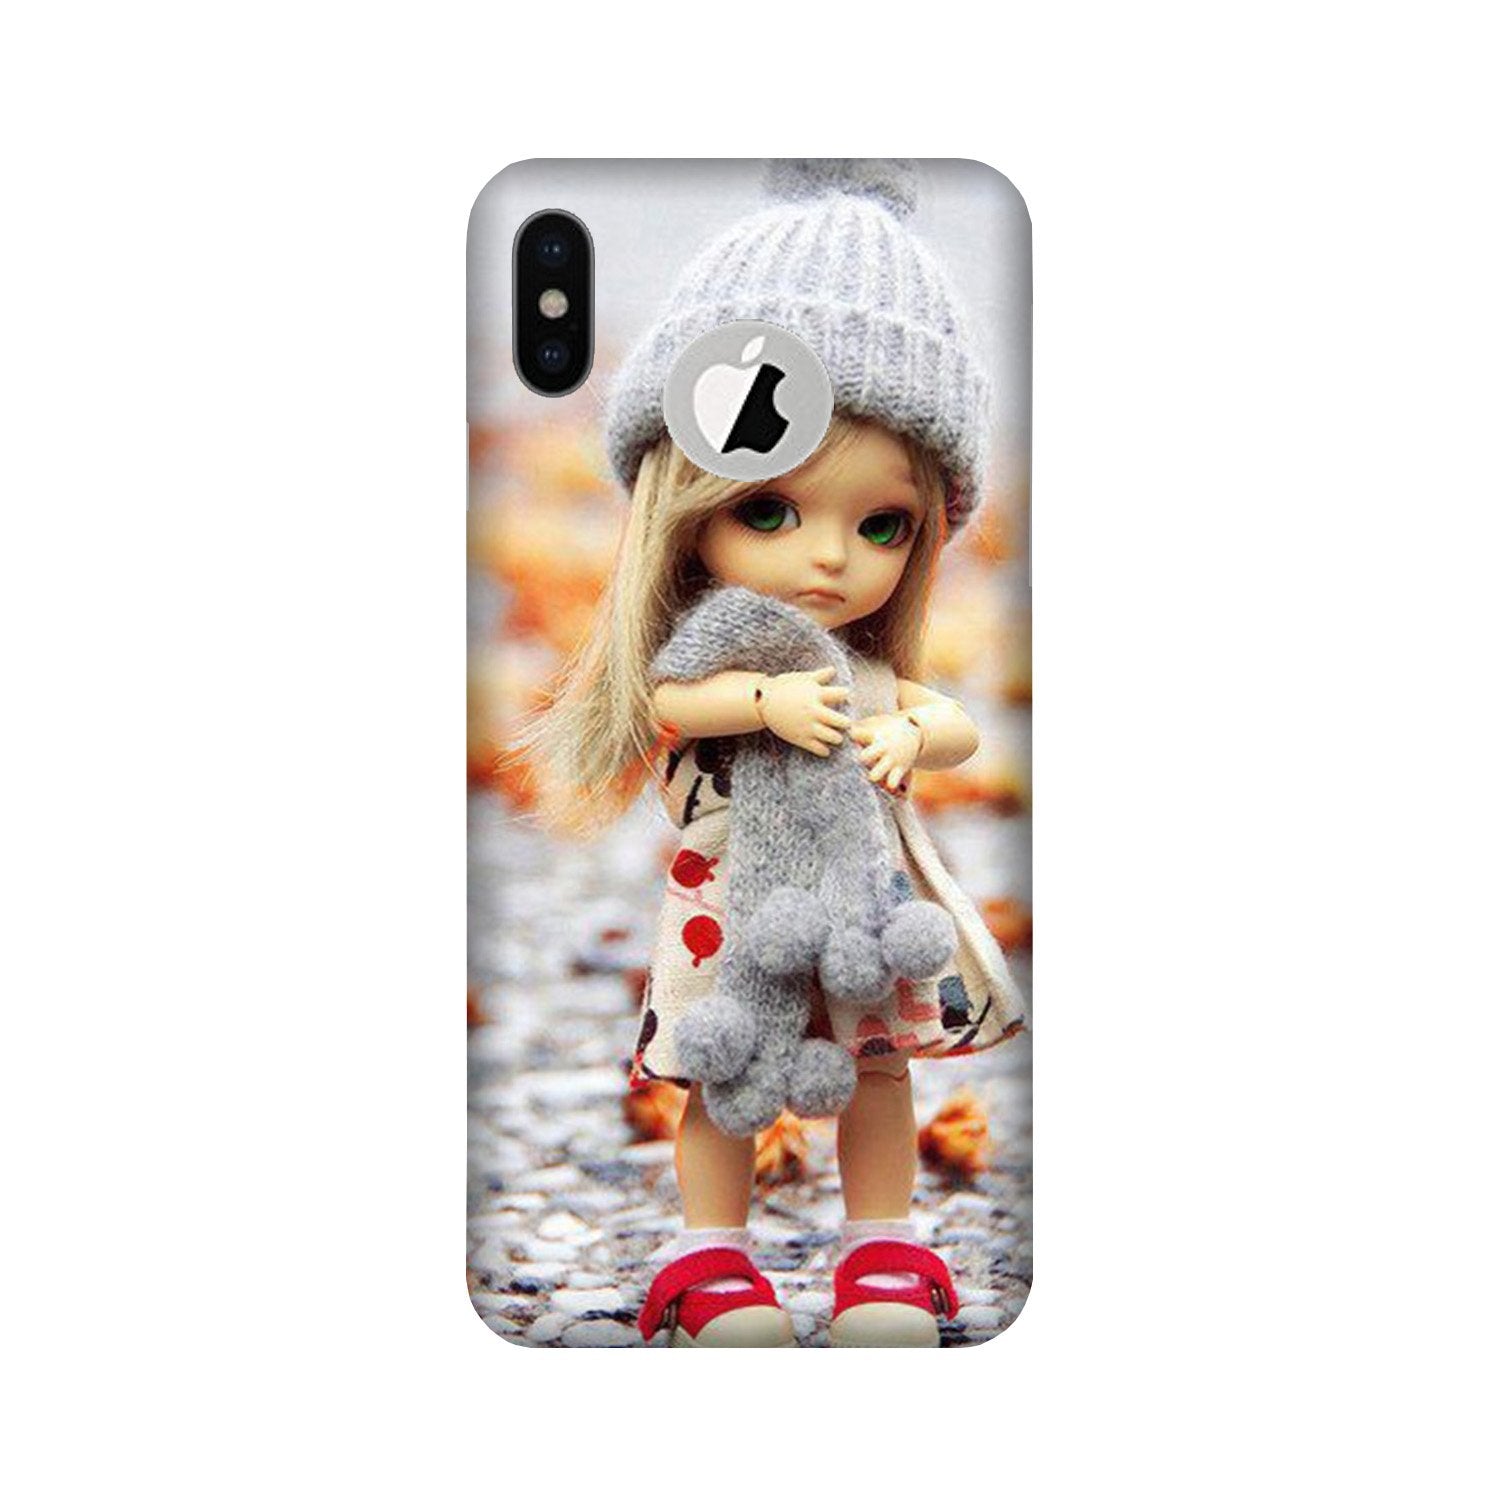 Cute Doll Case for iPhone X logo cut